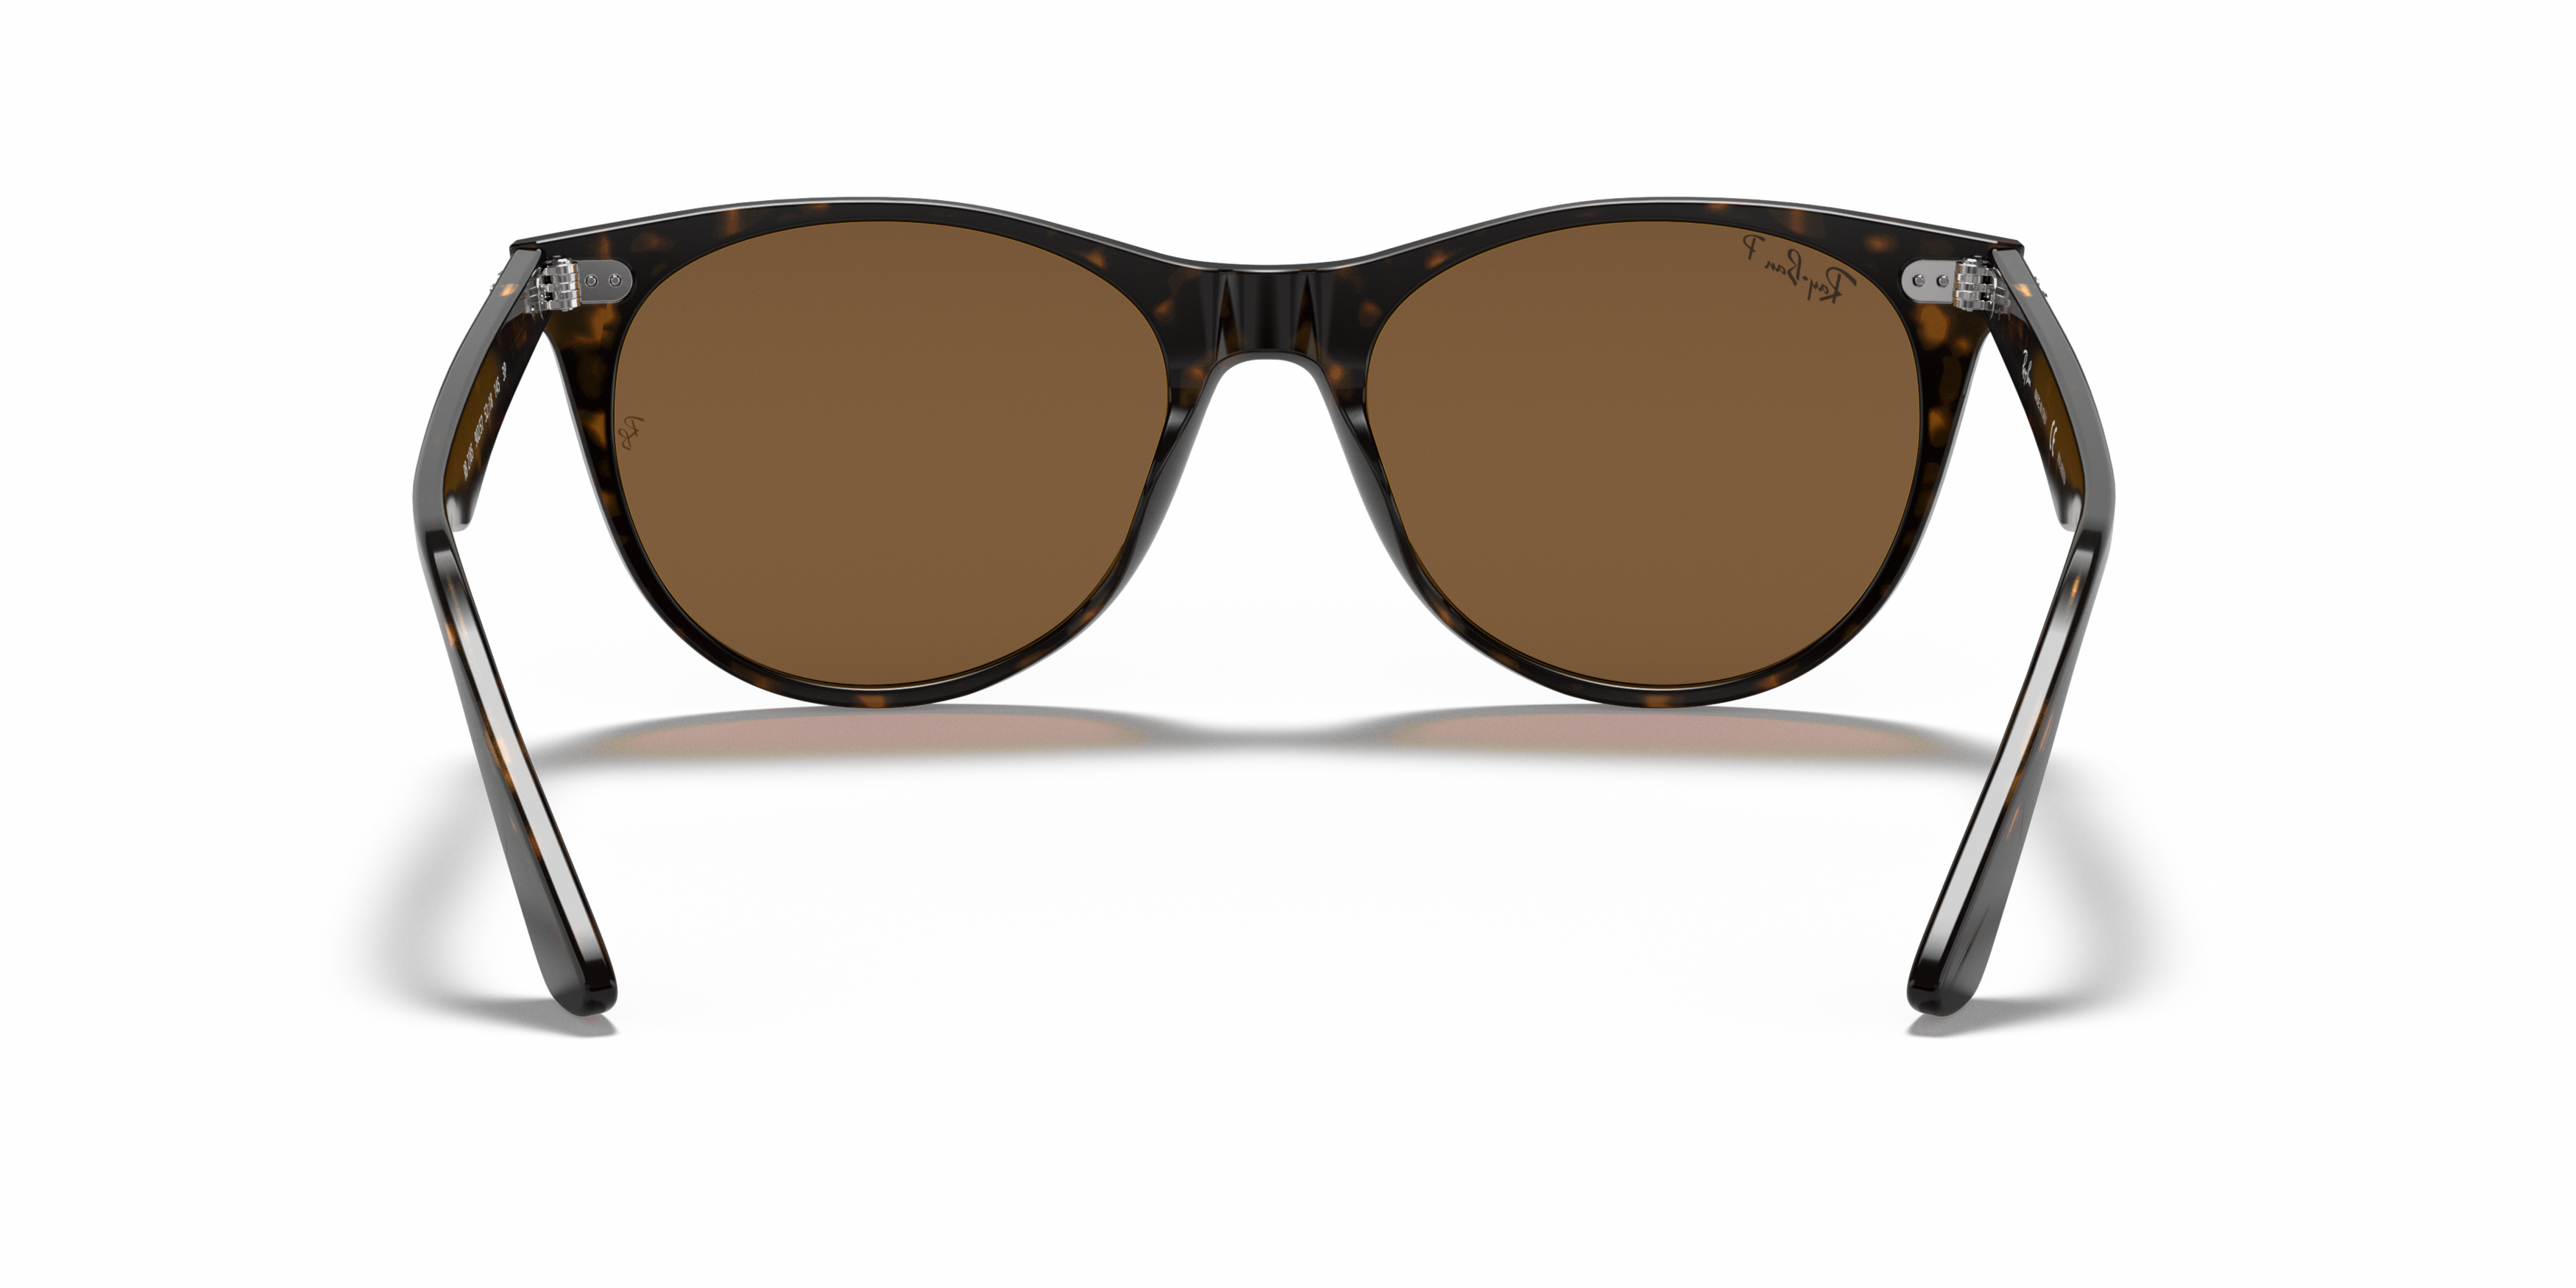 Detail02 Ray-Ban Wayfarer II RB 4187 (902/57) Sunglasses Brown / Havana